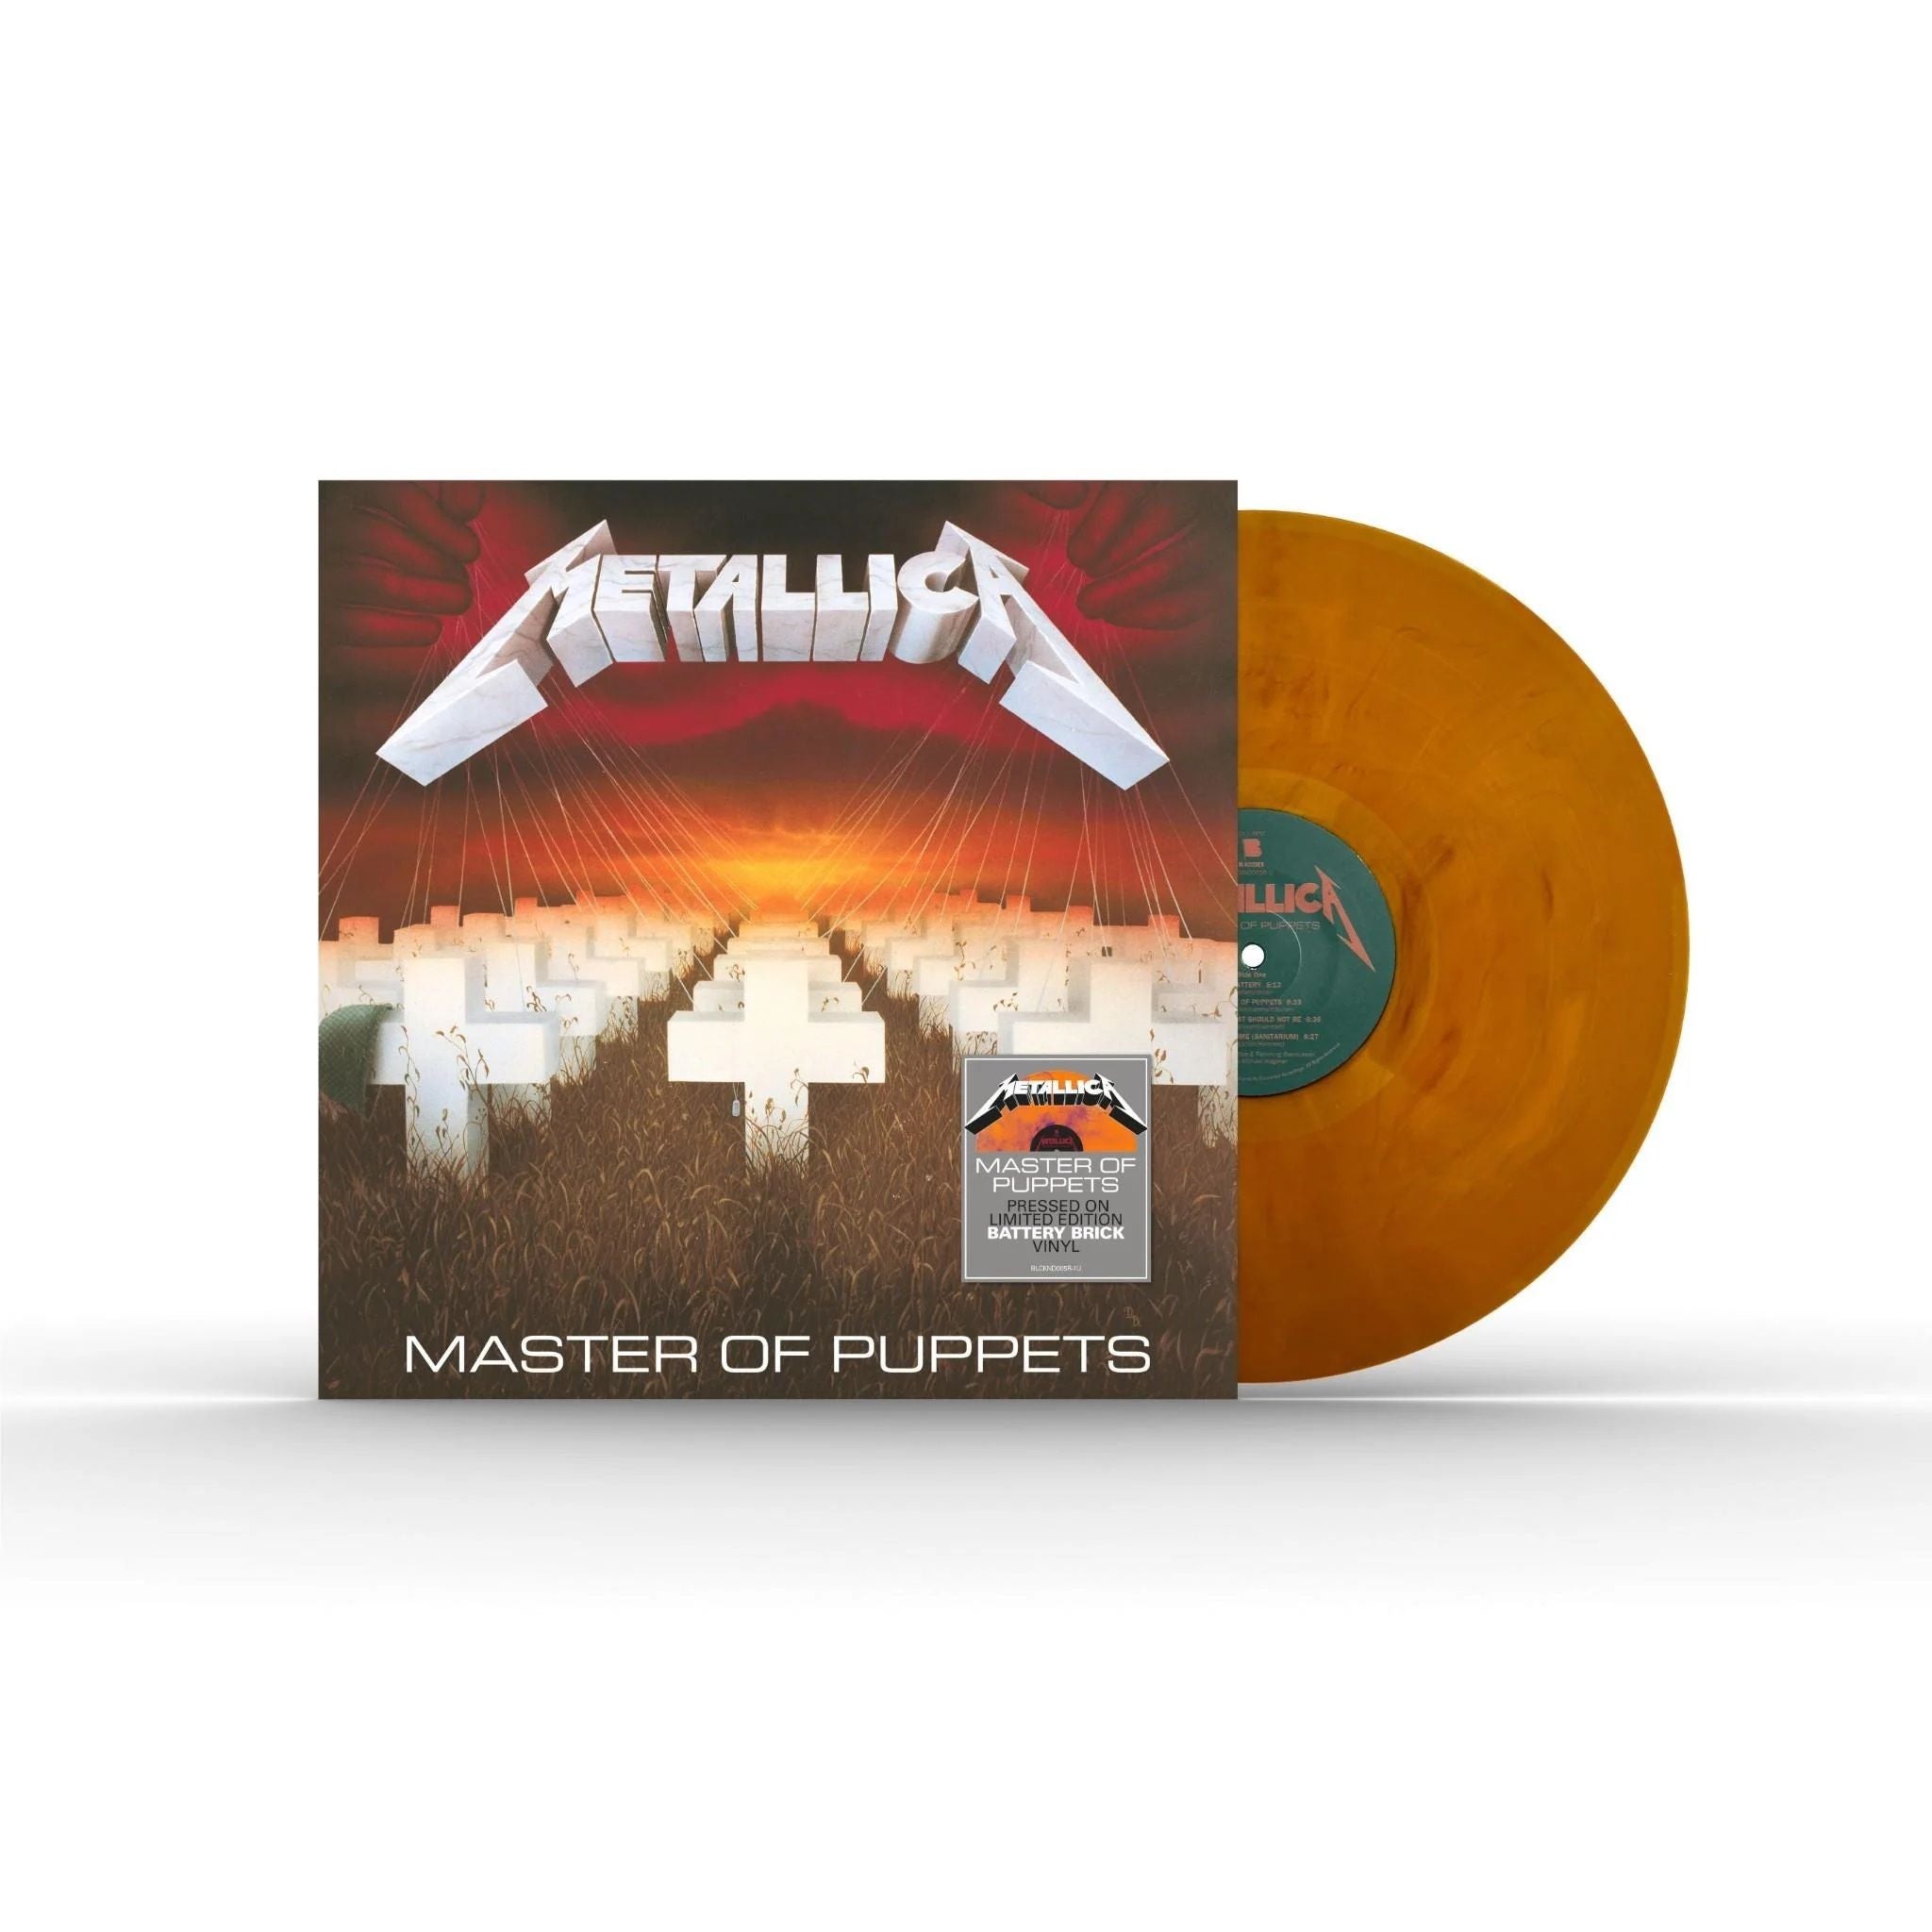 Metallica - Master Of Puppets (Ltd. Ed. Battery Brick vinyl reissue) - Vinyl - New